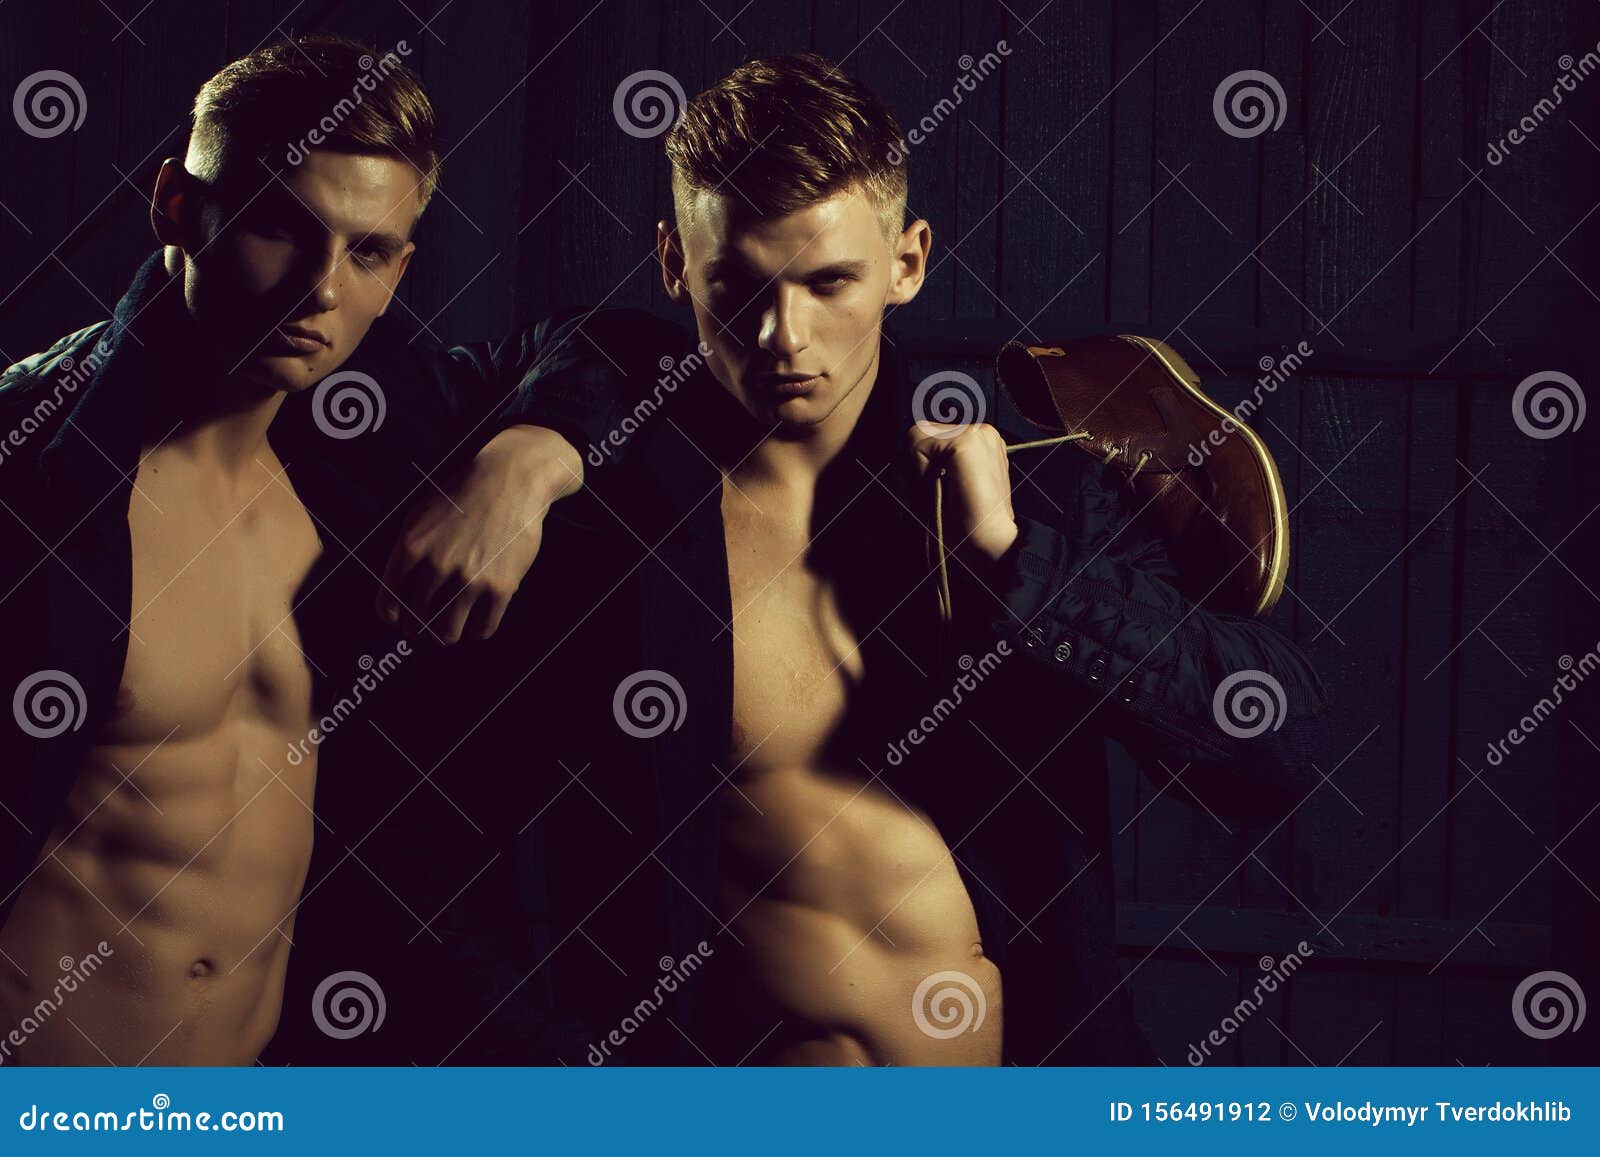 реклама сумок голыми мужиками фото 75